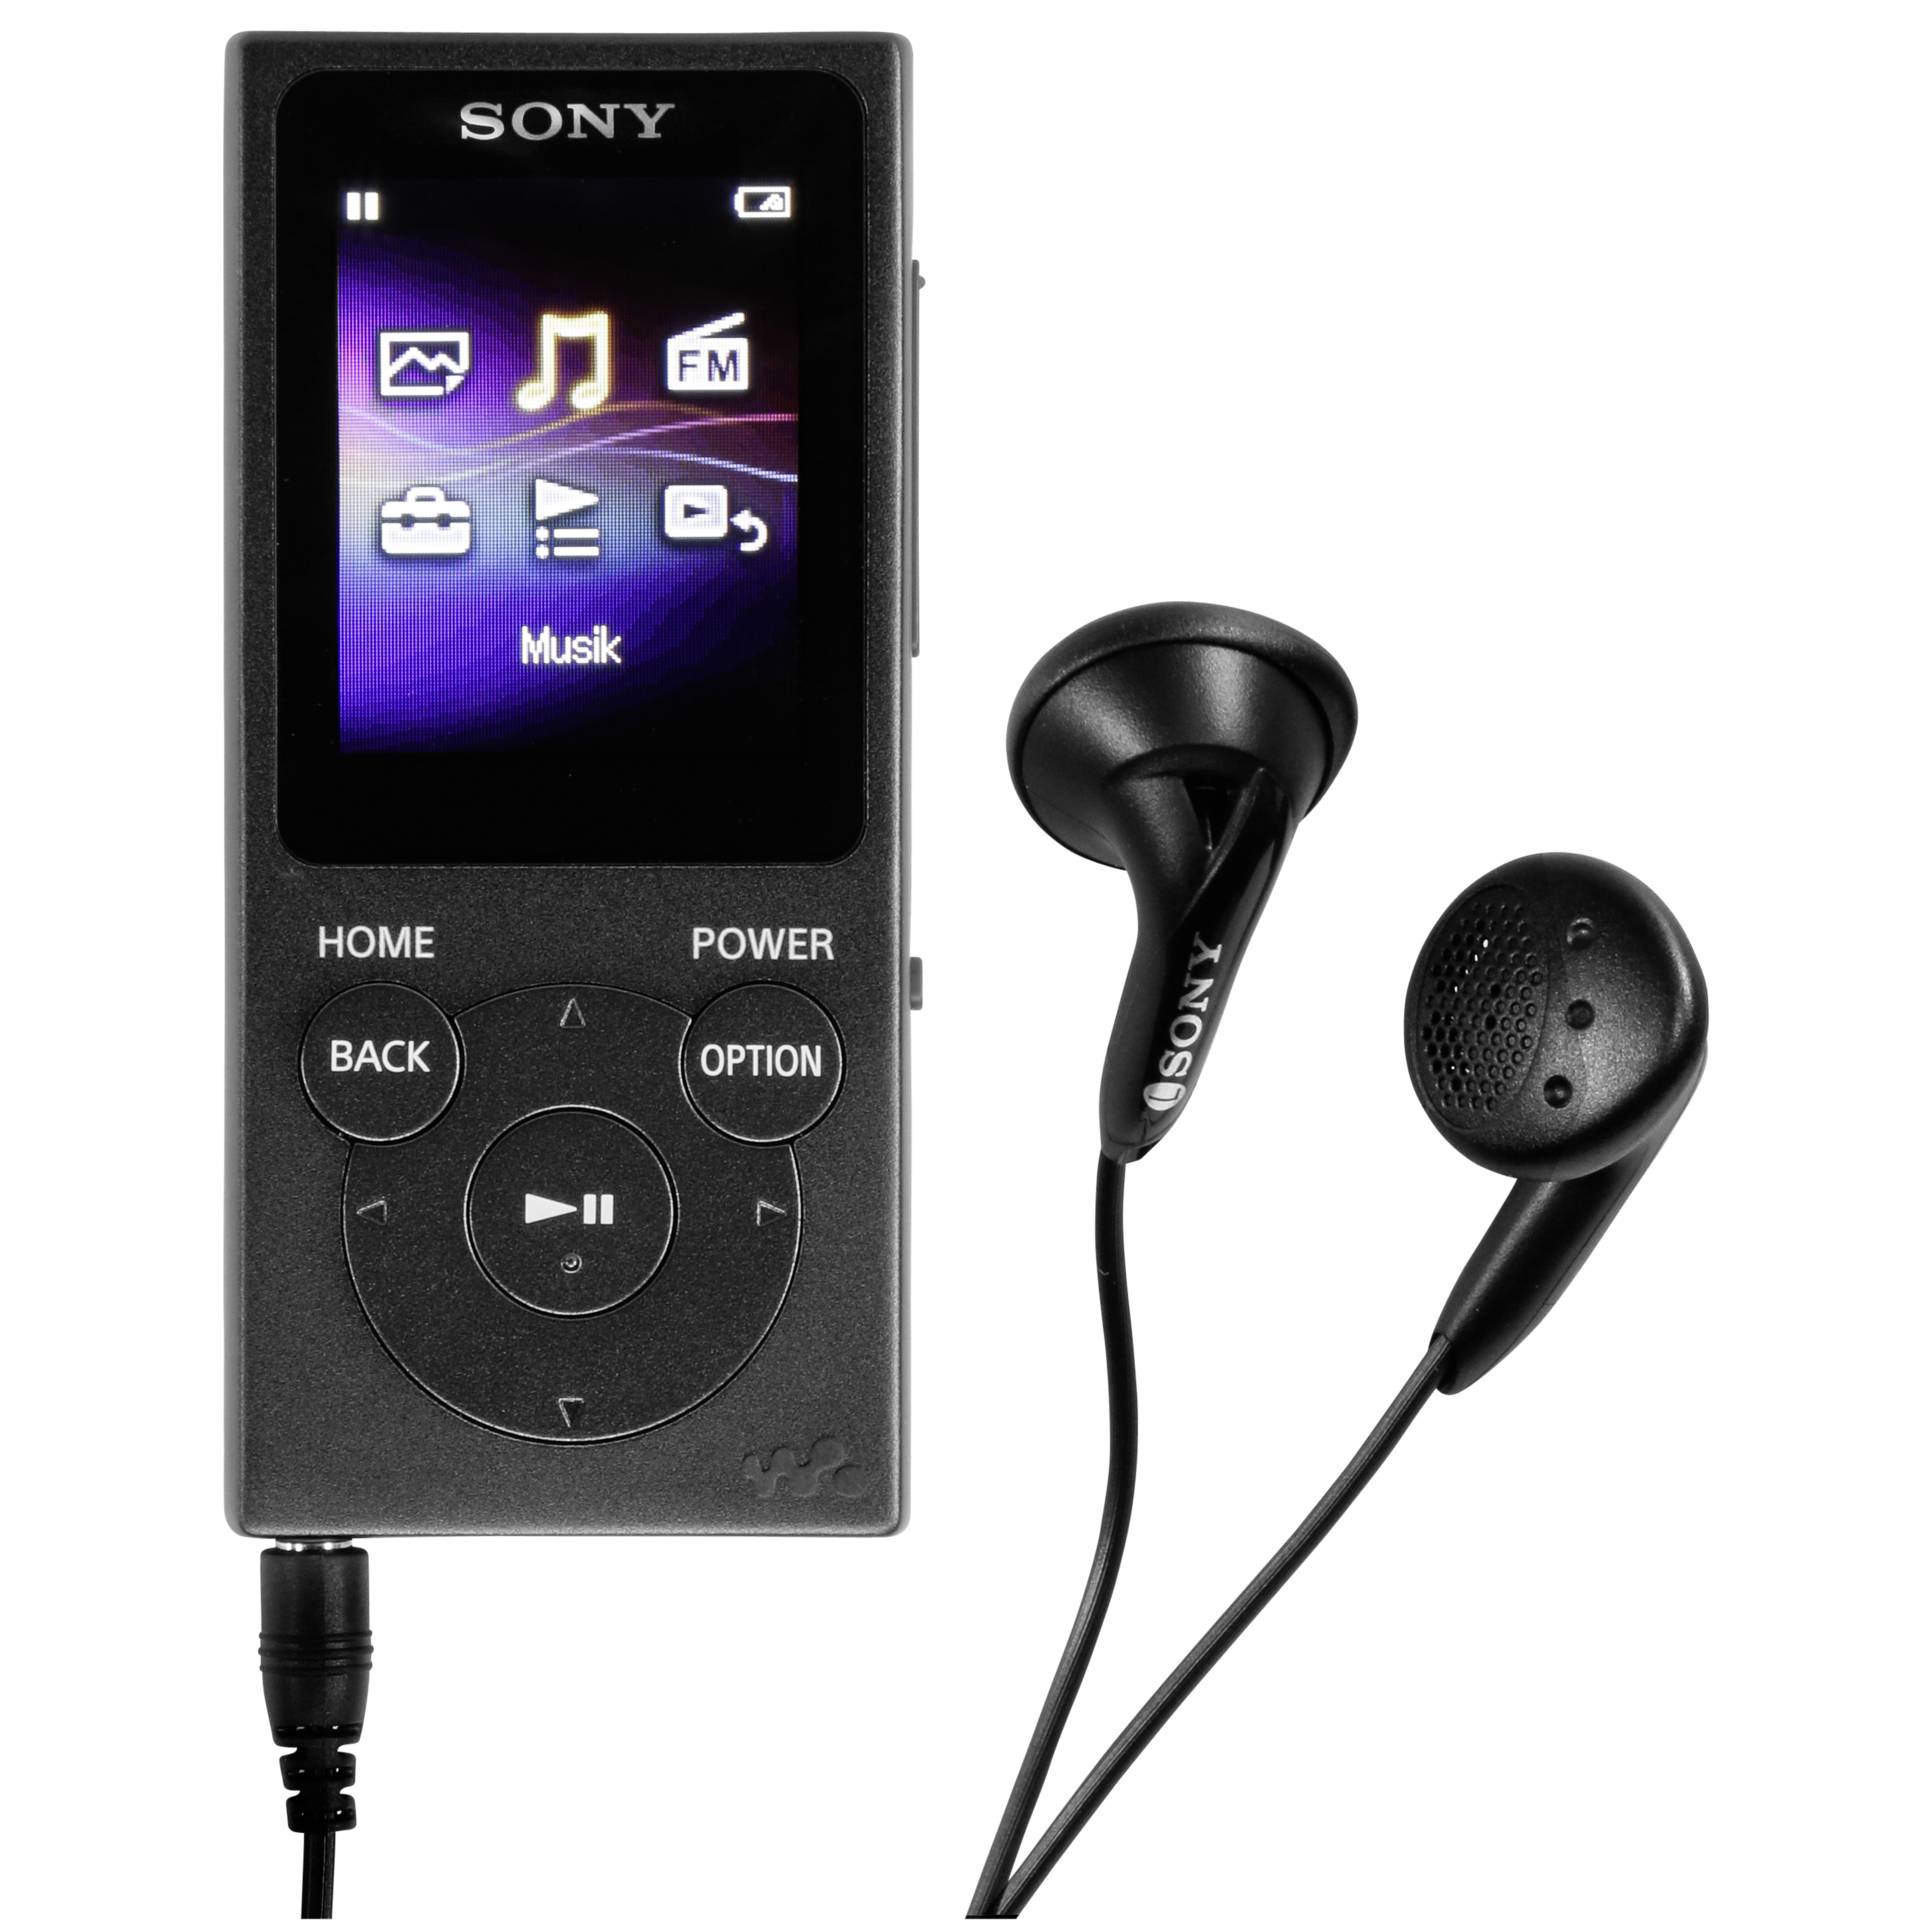 Sony Walkman NW-E394 MP3 player 8 GB Black